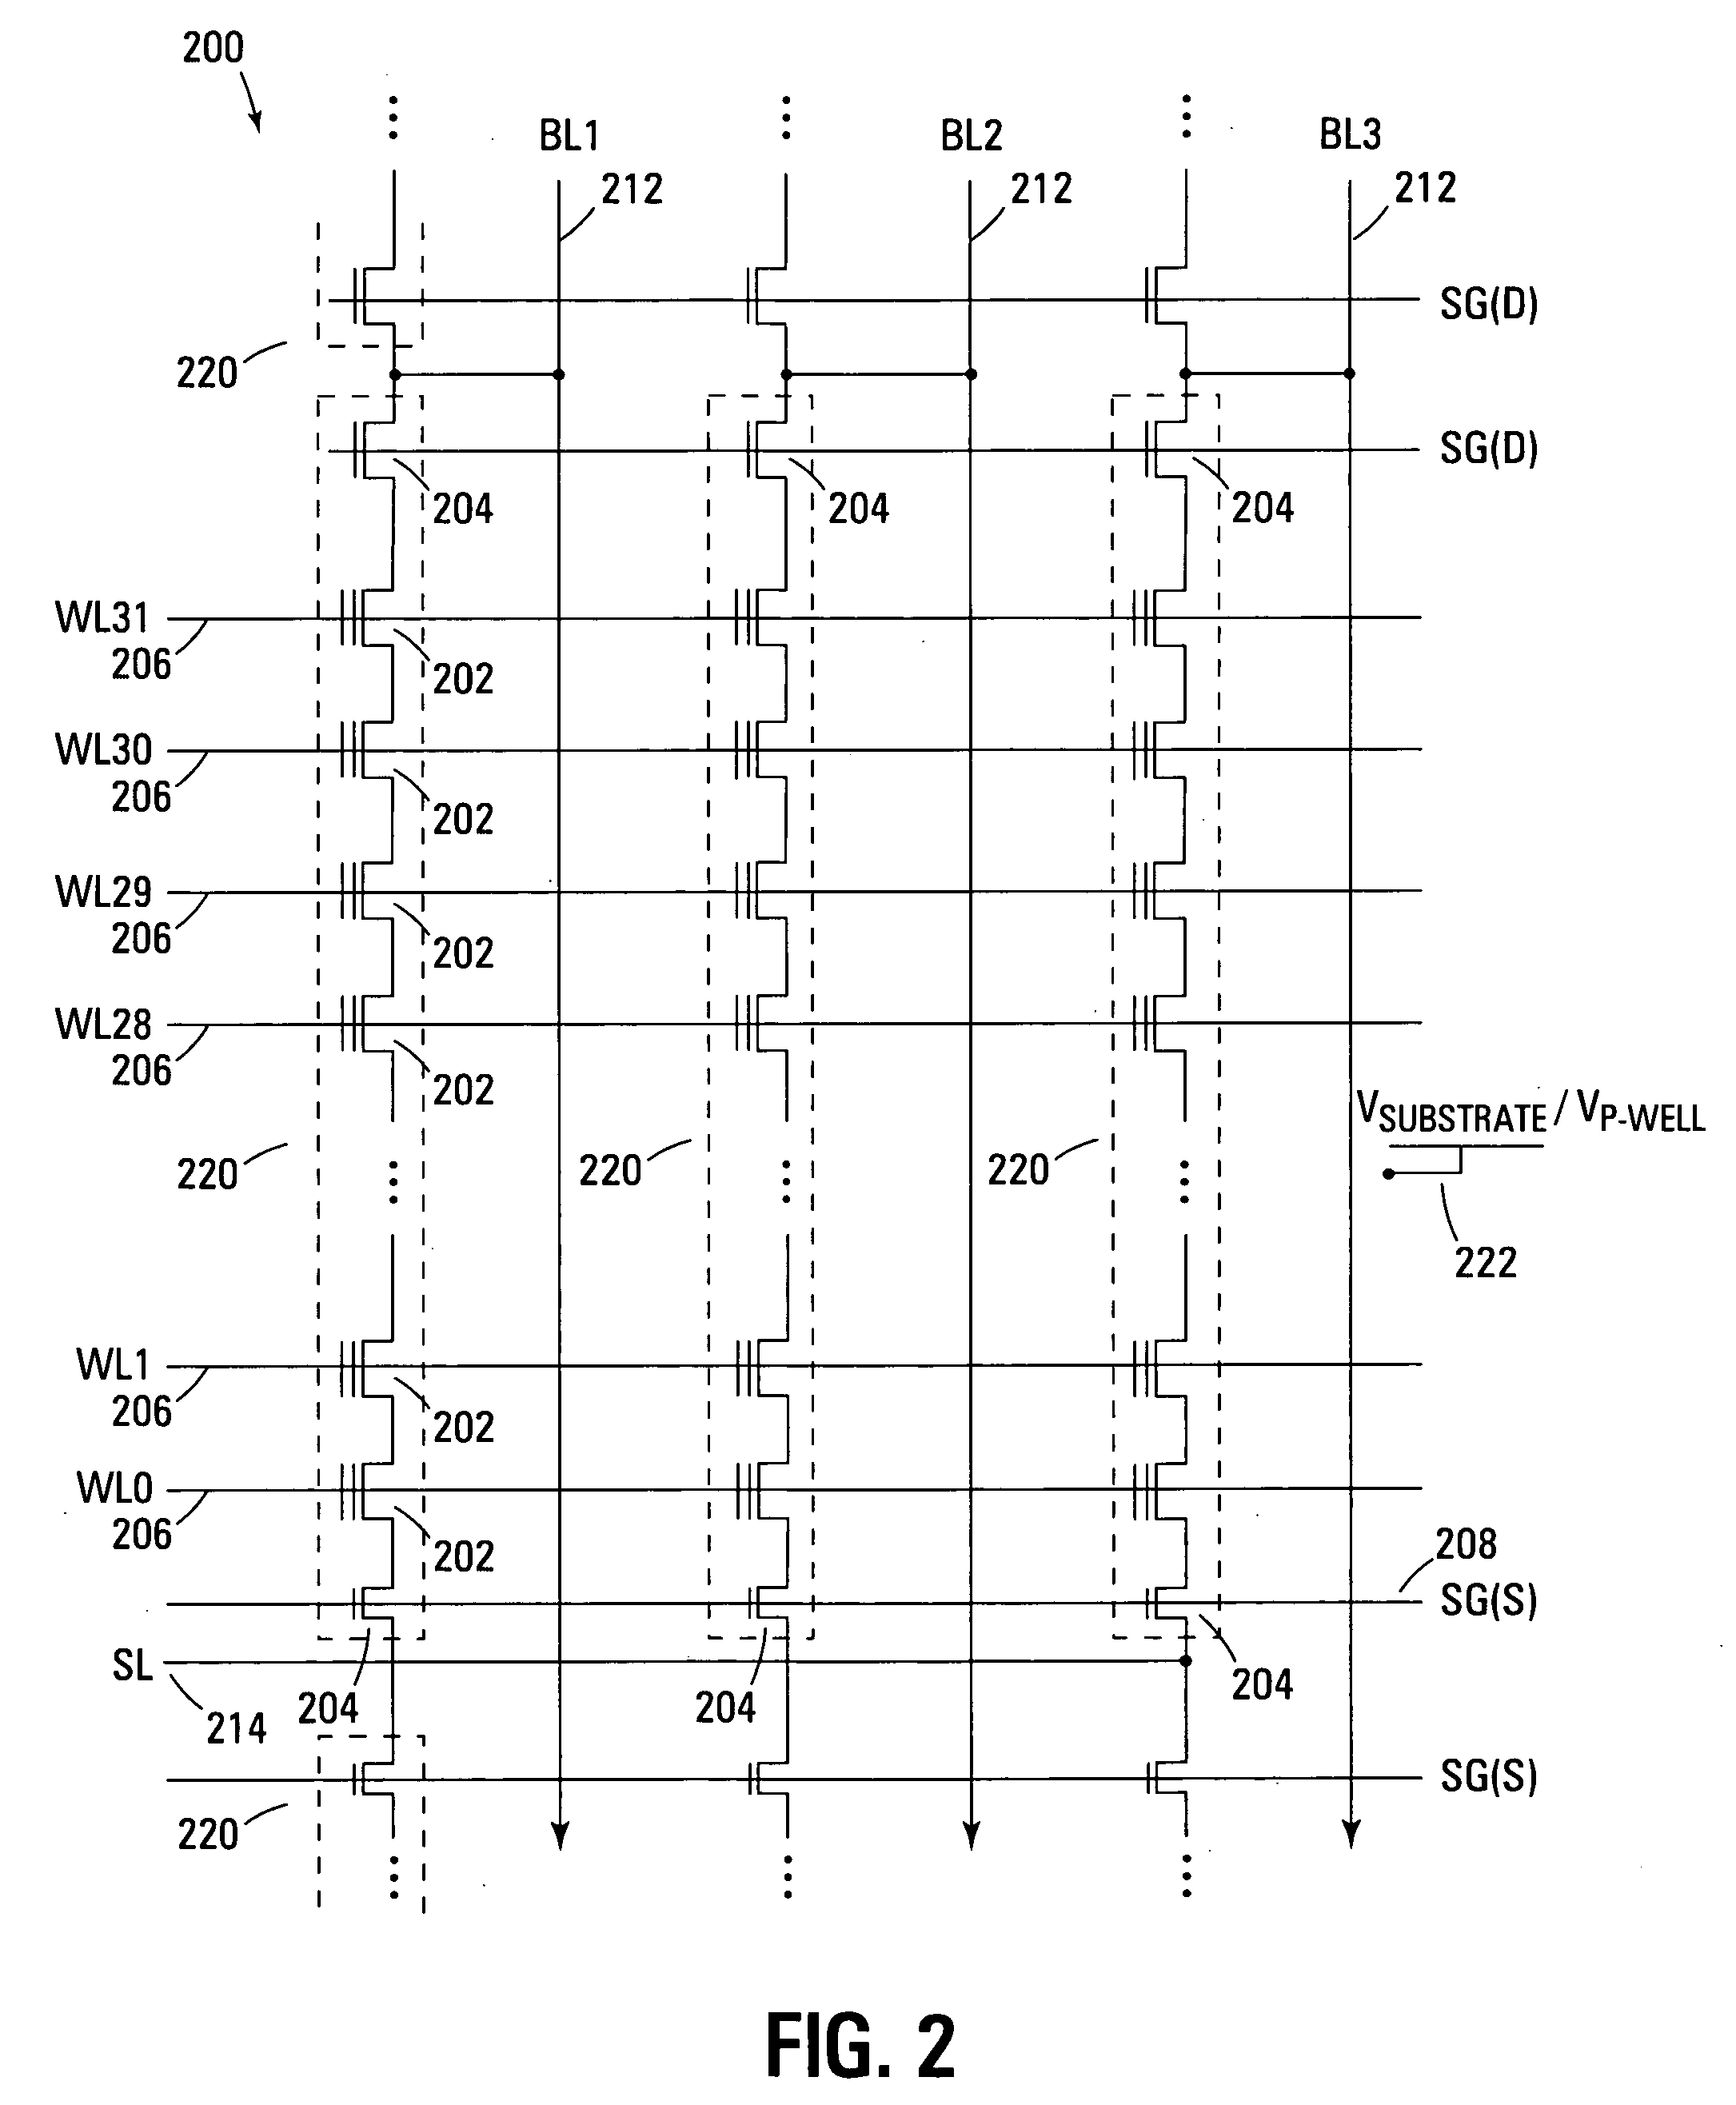 Programming method for NAND EEPROM